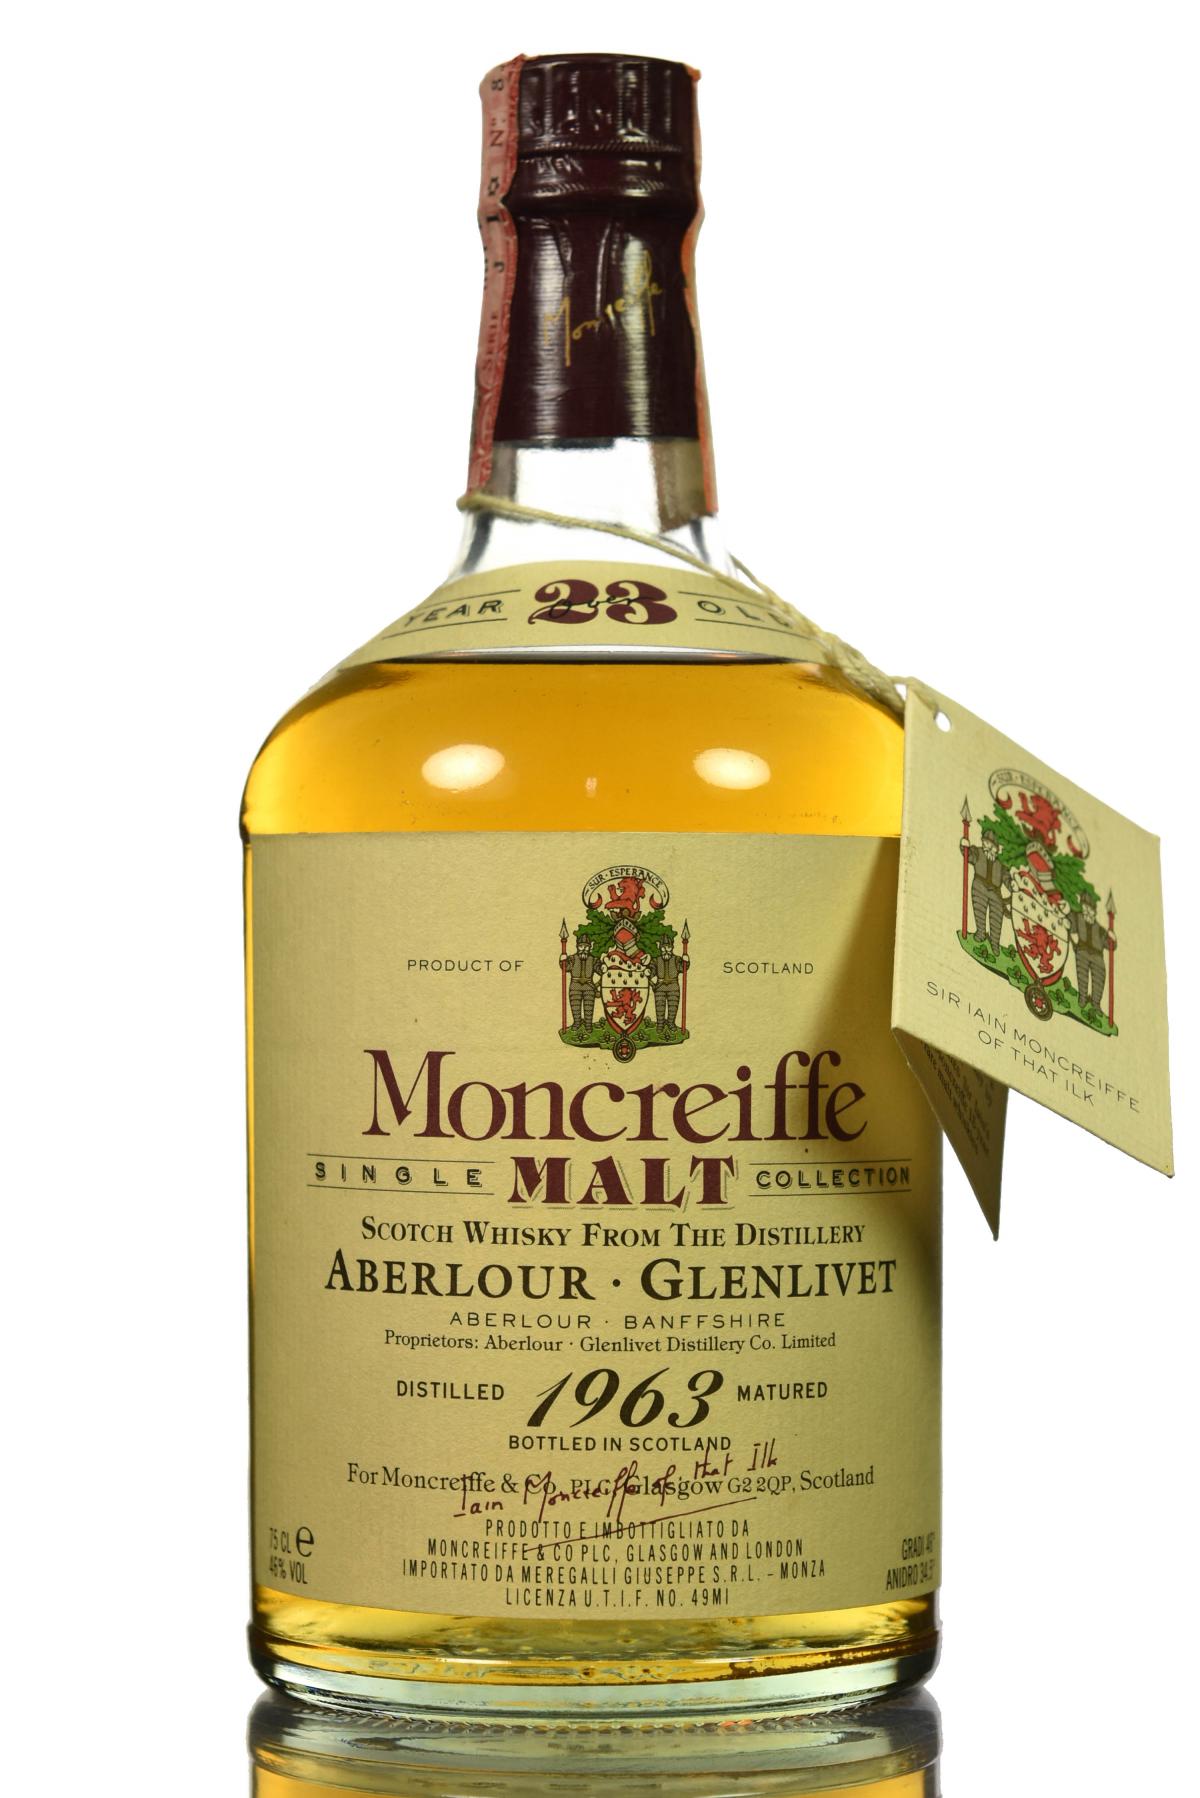 Aberlour-Glenlivet 1963 - 23 Year Old - Moncreiffe - 1980s